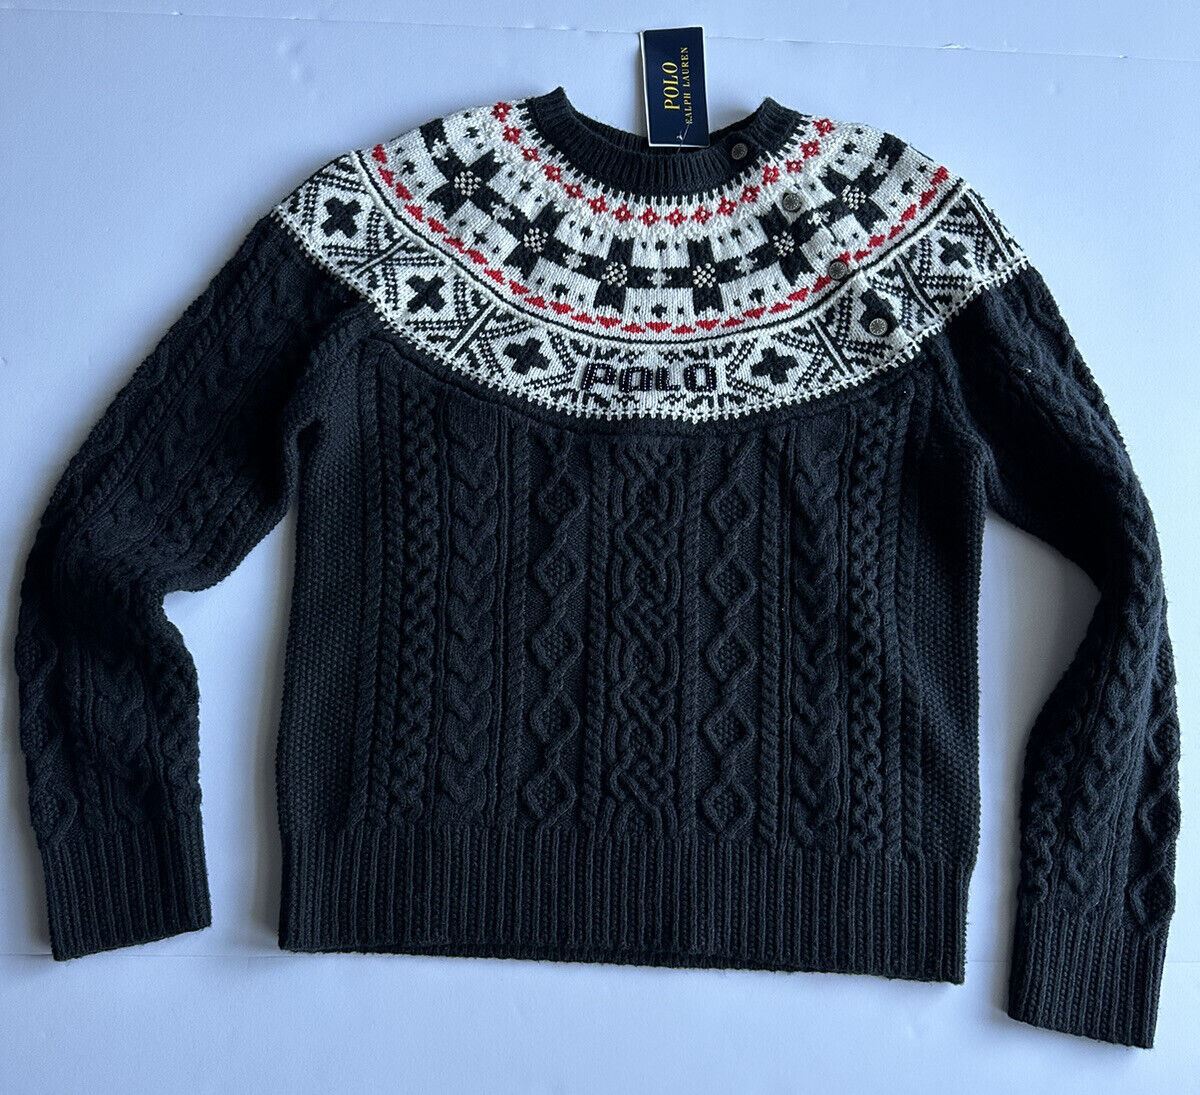 NWT $165 Polo Ralph Lauren Girls Black Cotton/Wool Sweater Size L (12-14)